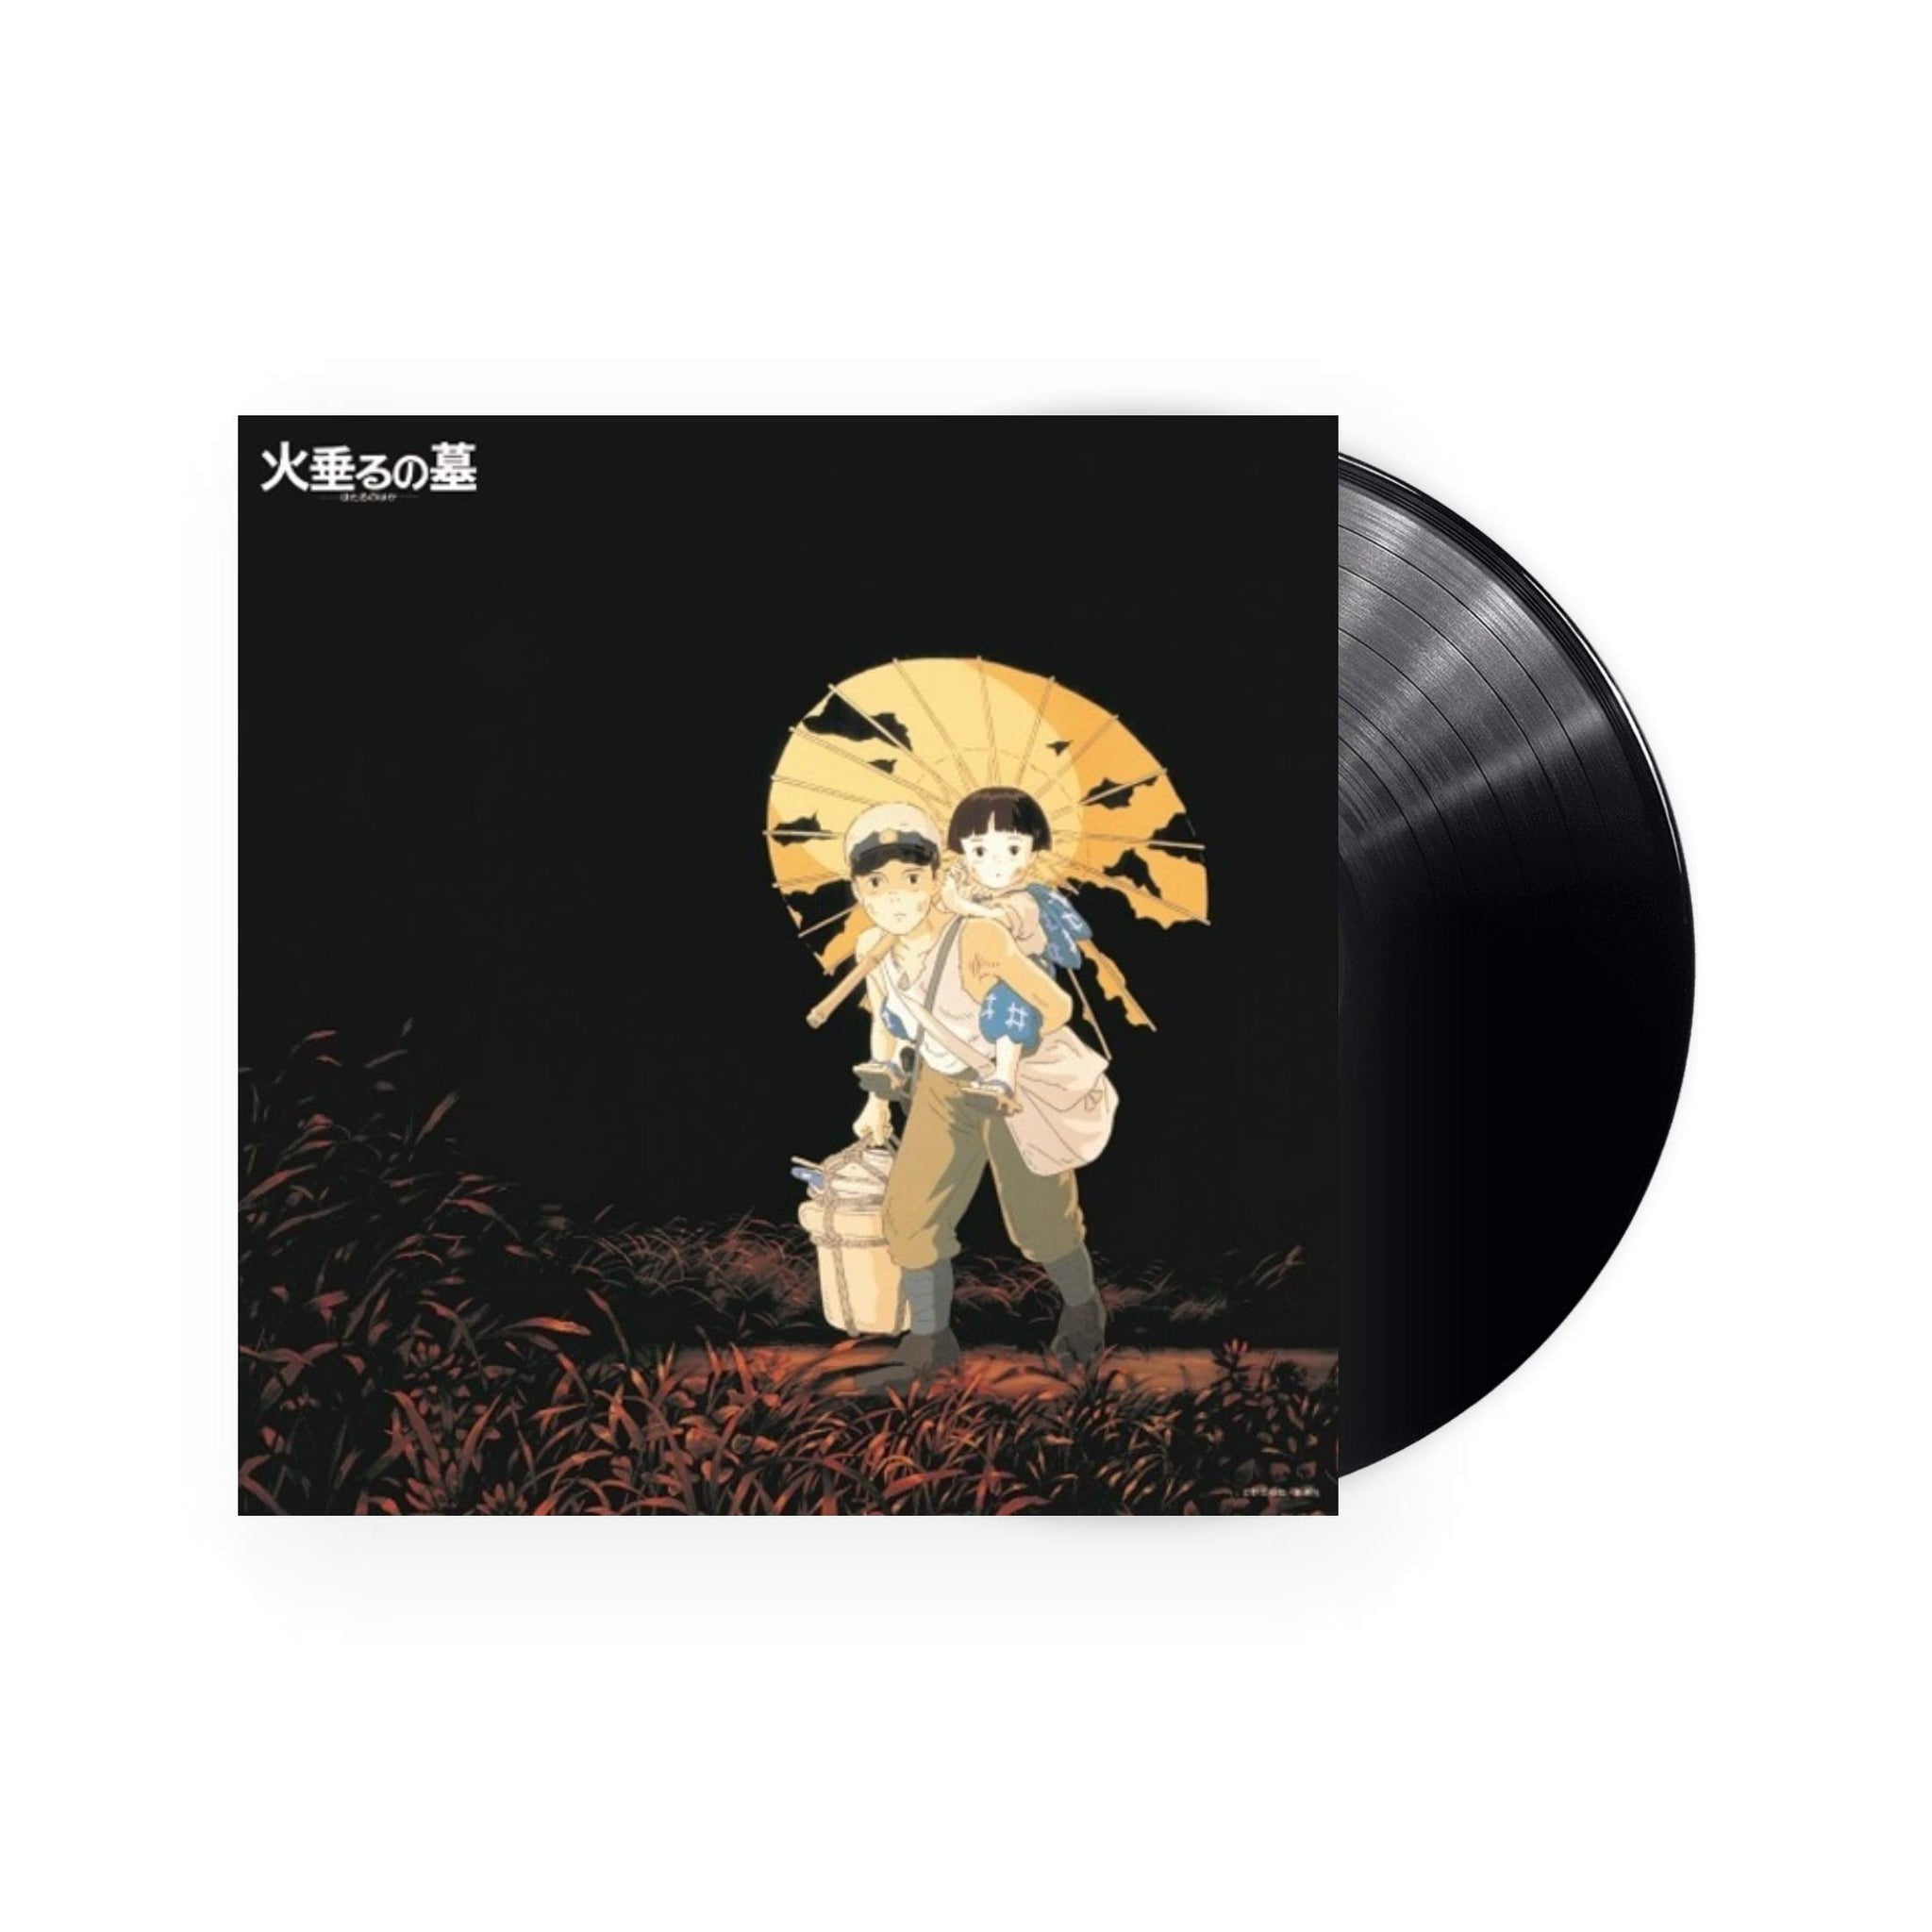 Grave of the Fireflies: Image Album Collection LP (Black Vinyl)